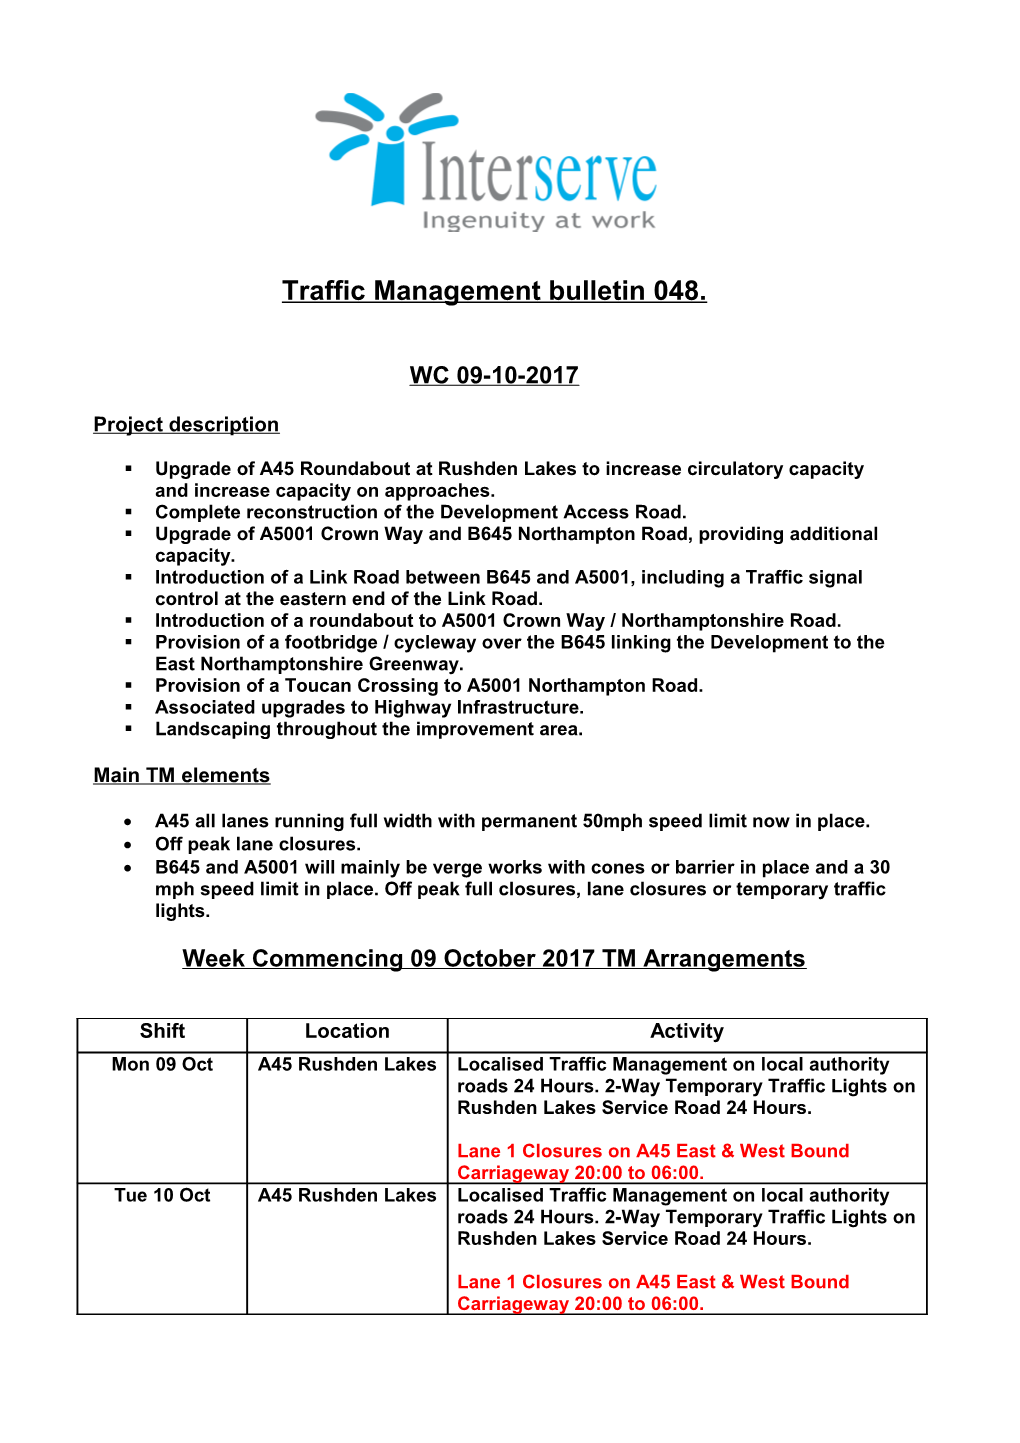 Traffic Management Bulletin 048